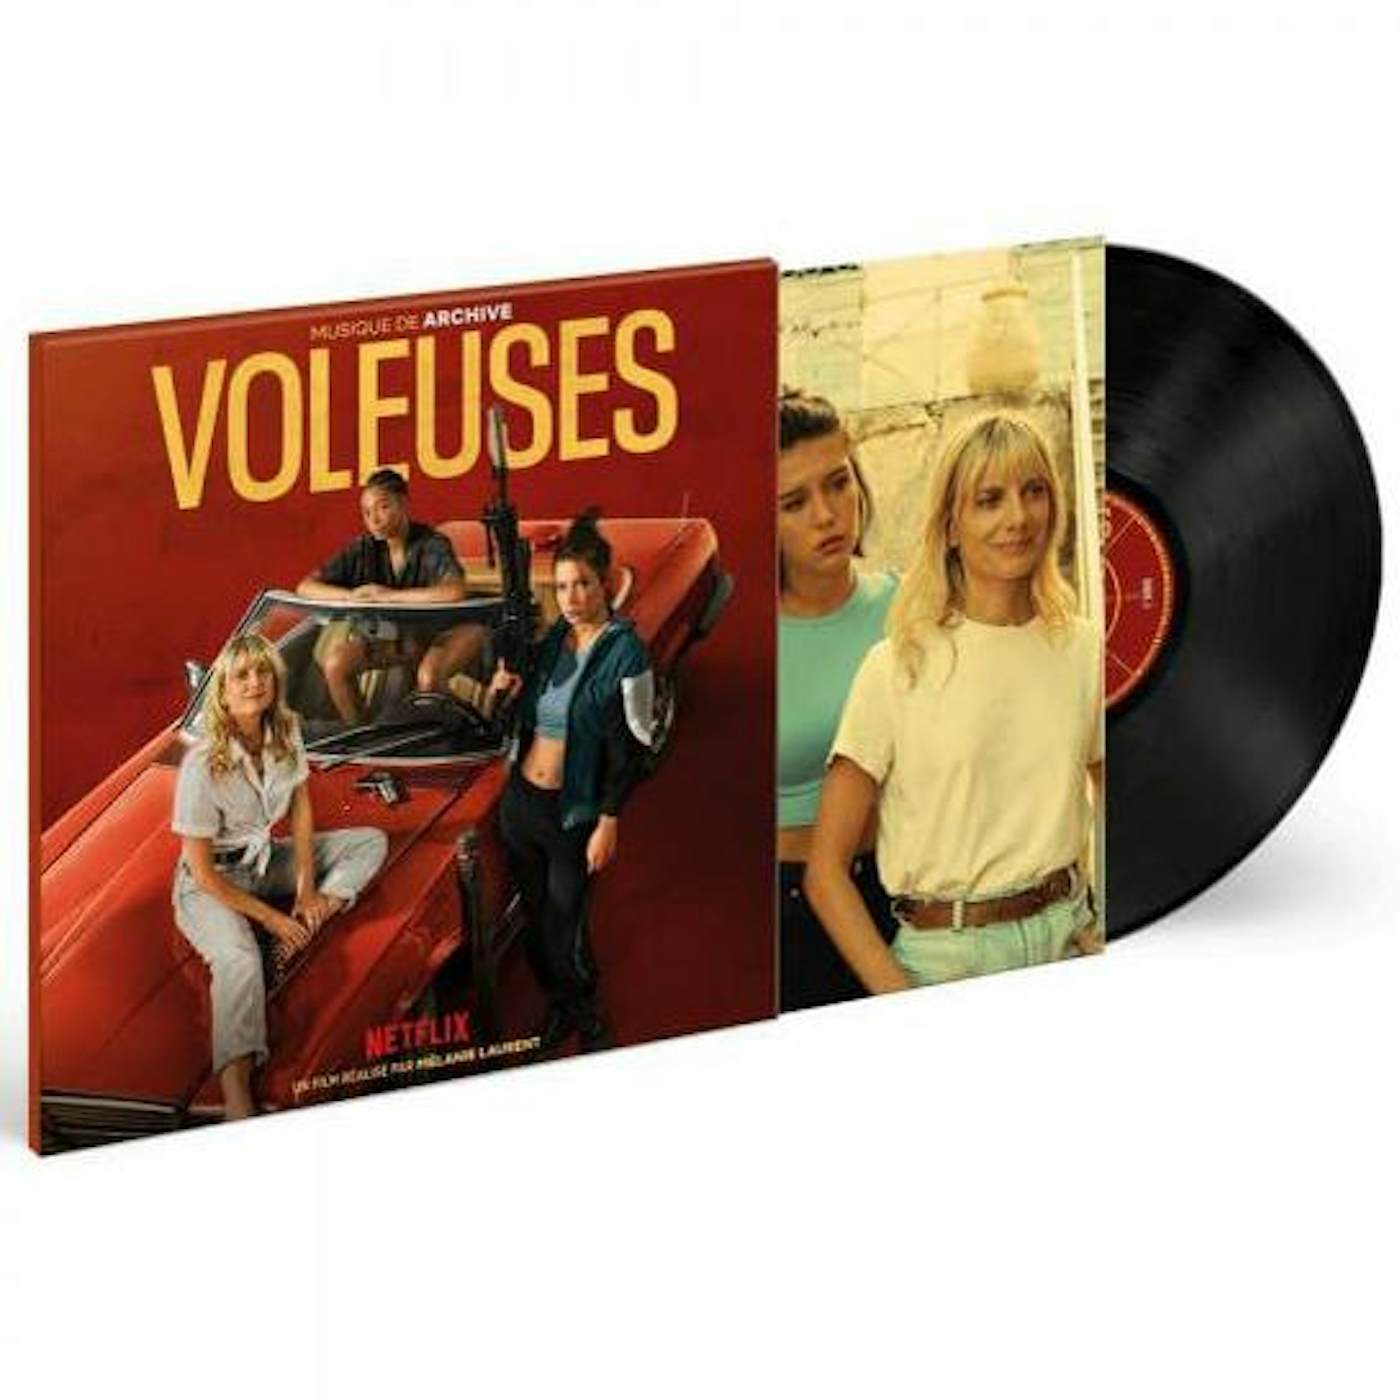 Archive Voleuses (Soundtrack Du Film Netflix) - Original Soundtrack Vinyl Record